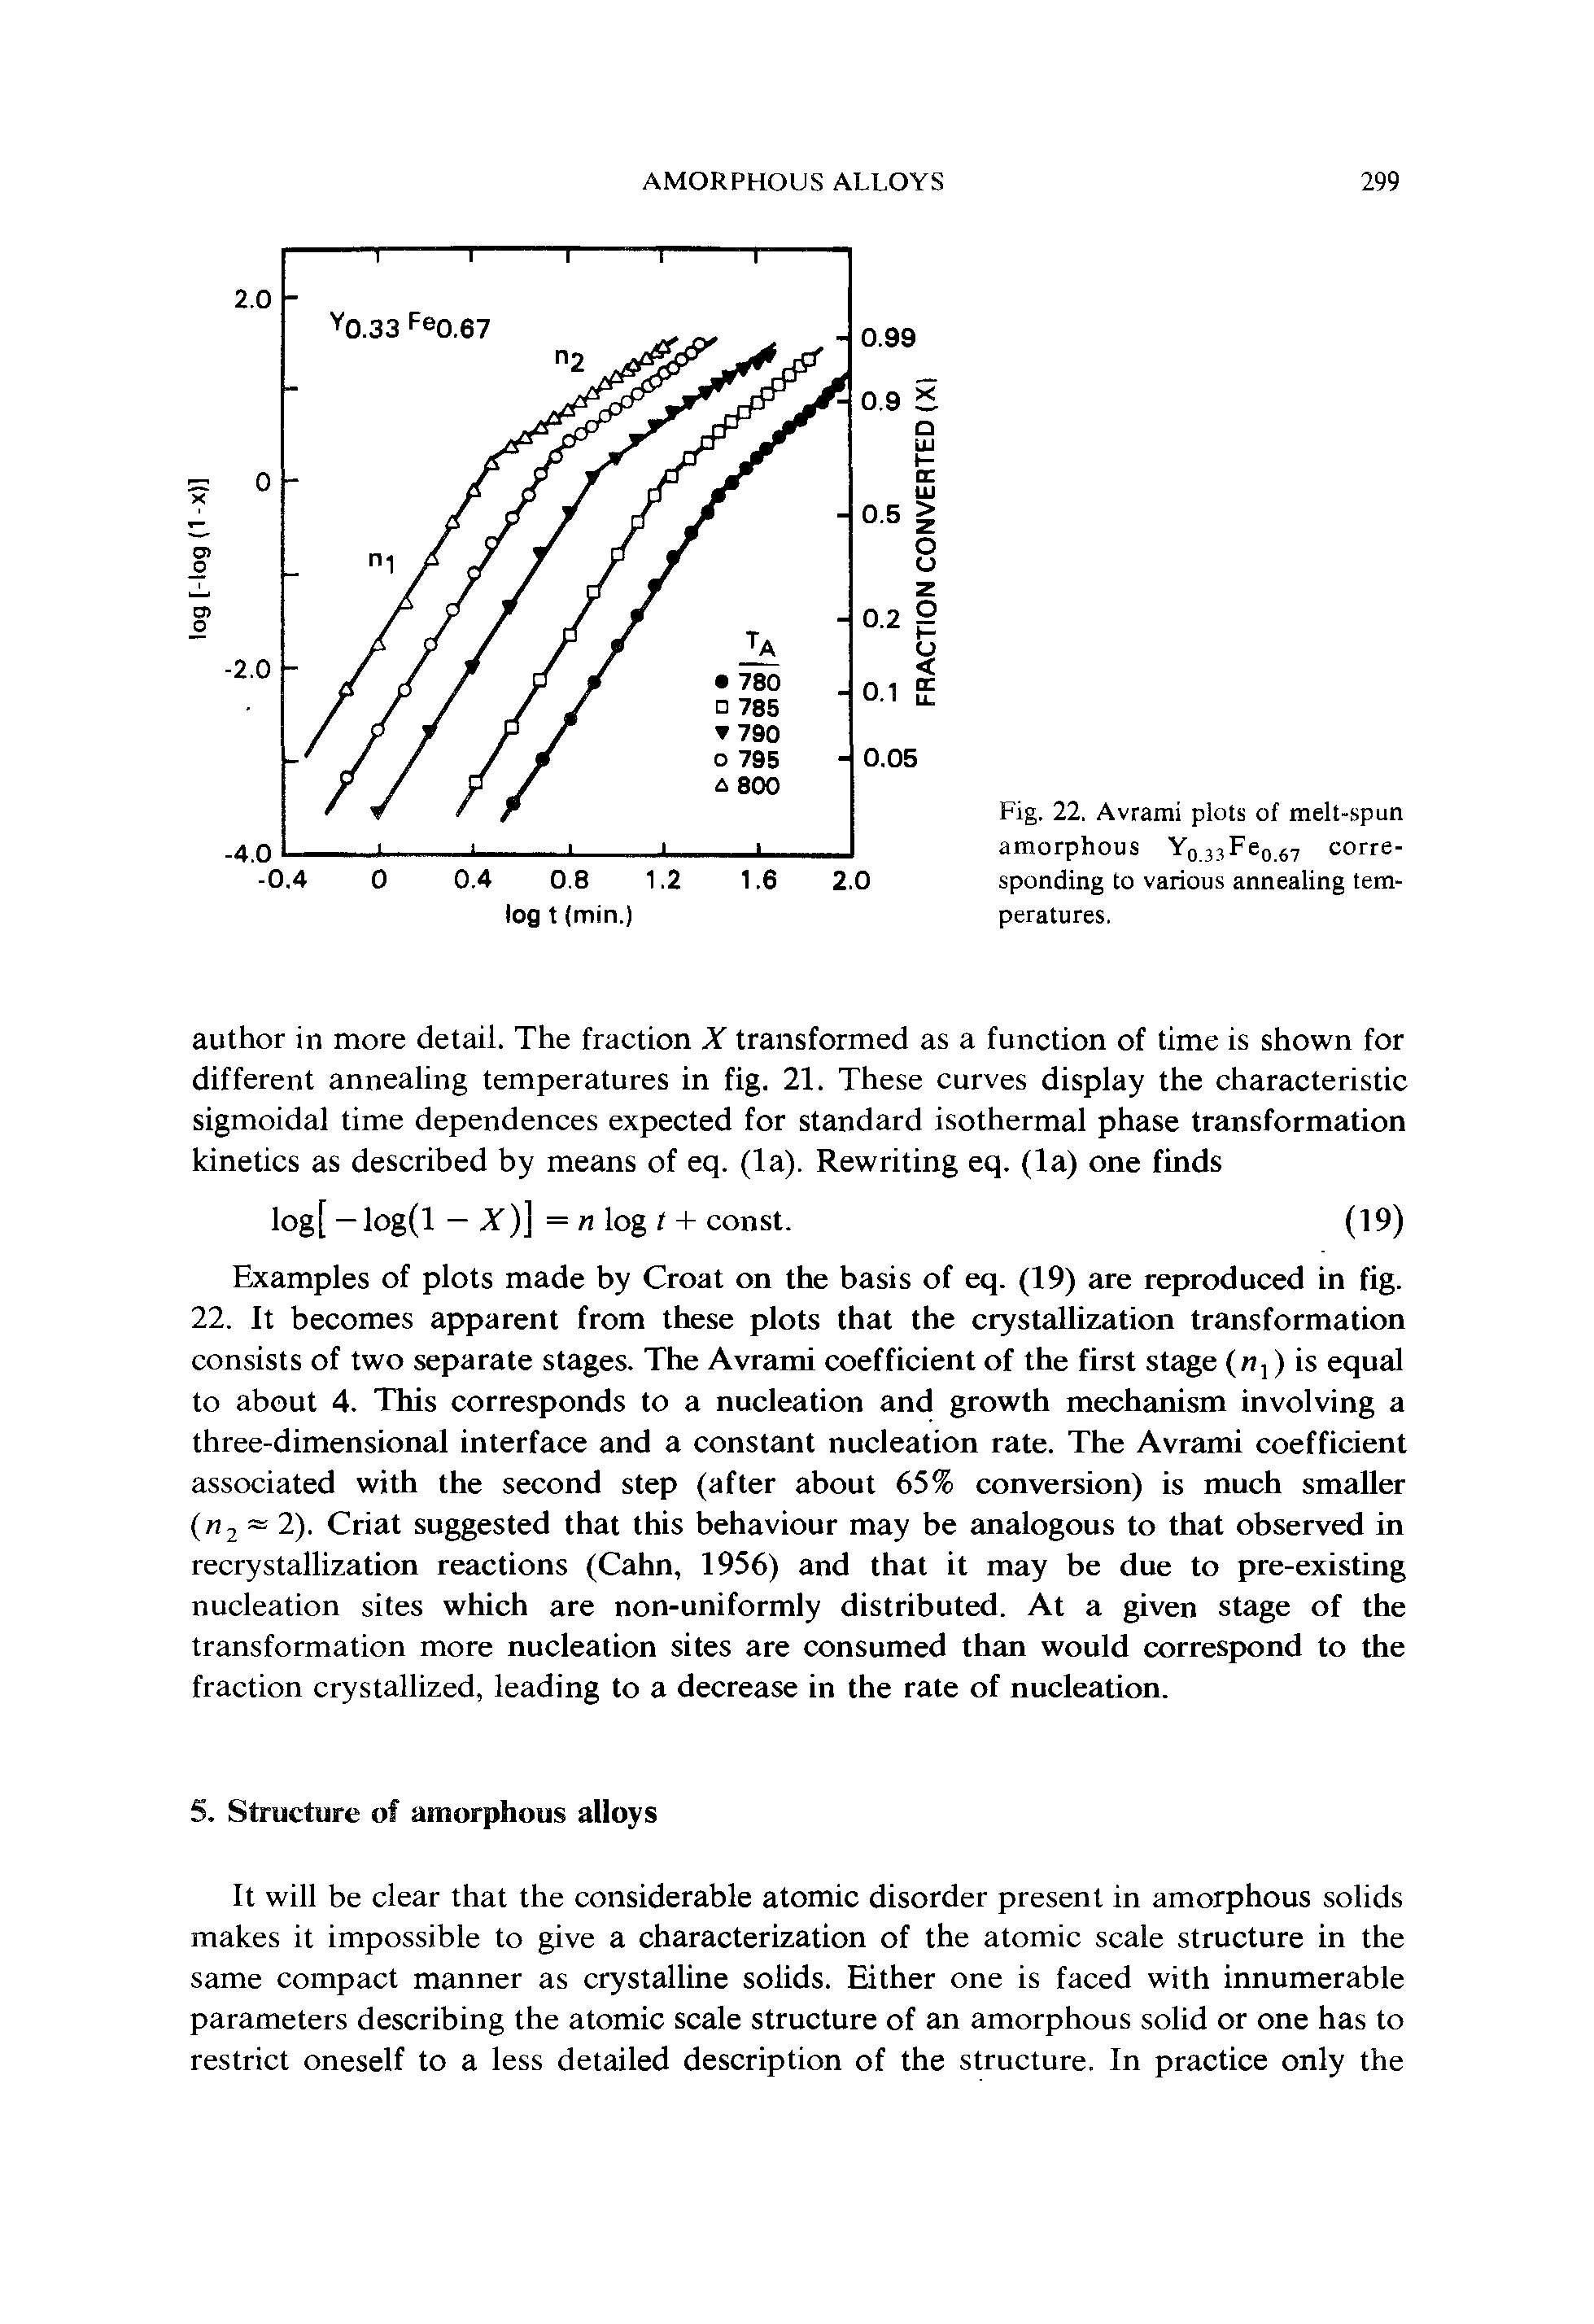 Fig. 22. Avrami plots of melt-spun amorphous YojjFeo. v corresponding to various annealing temperatures.